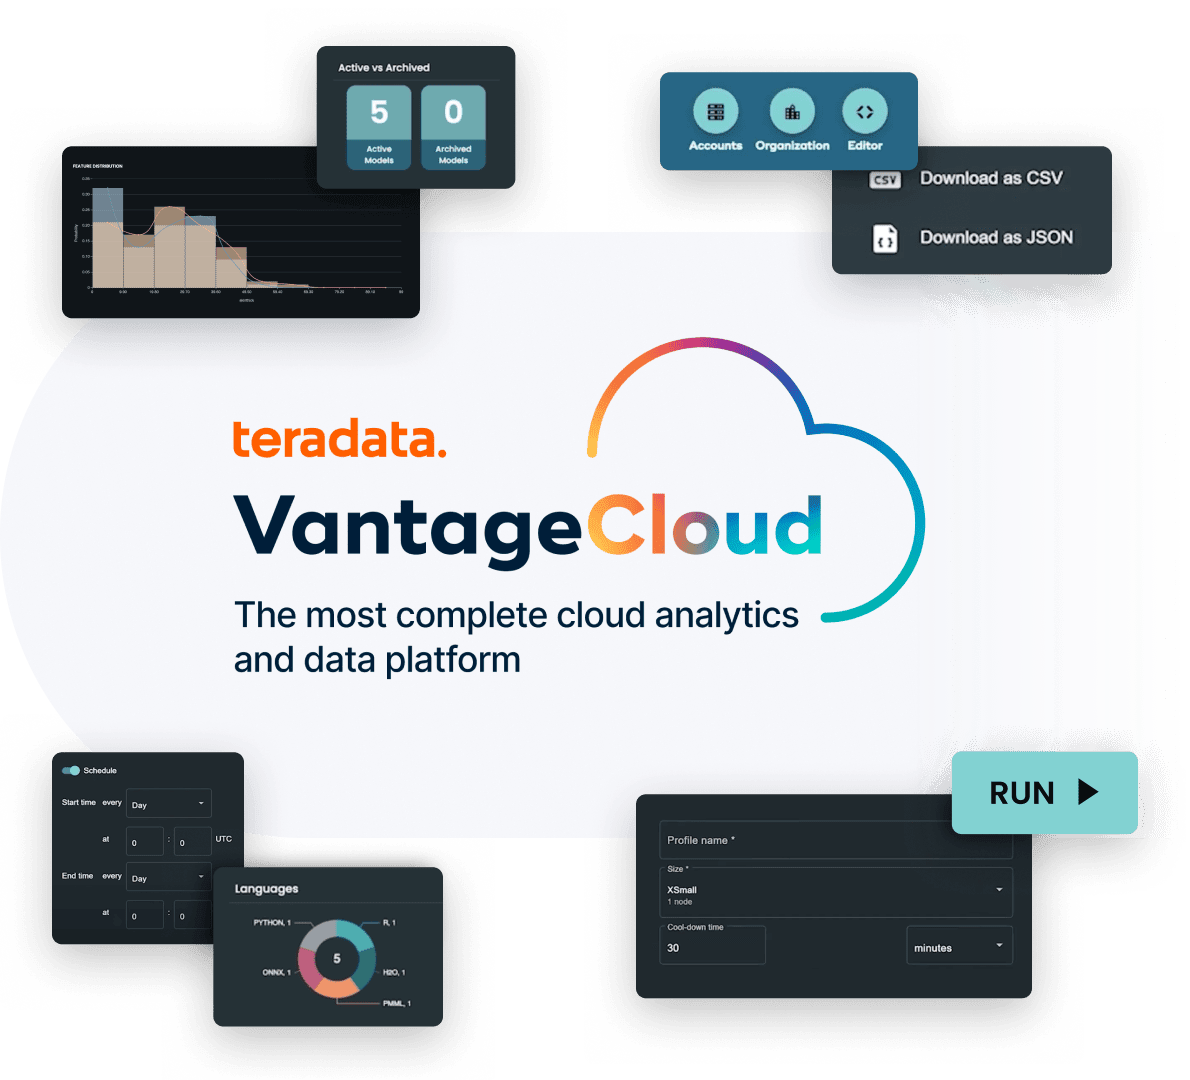 Teradata VantageCloud: The Complete Cloud Analytics and Data Platform